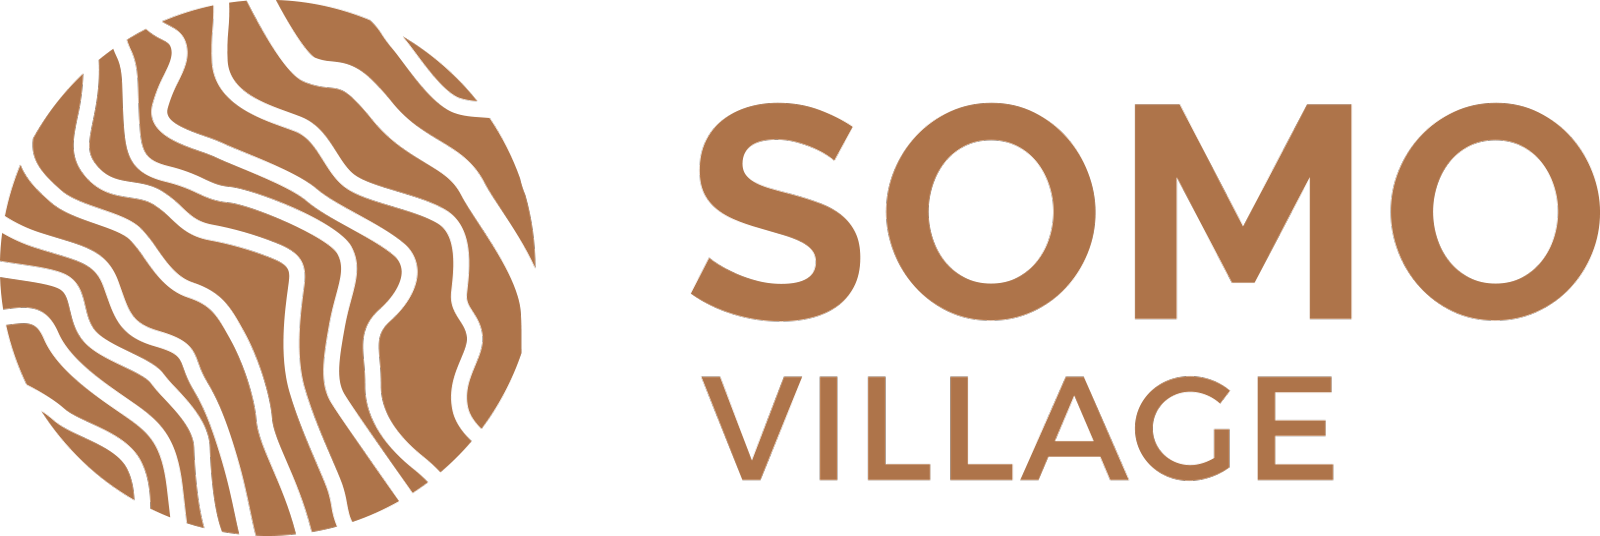 SOMO Village